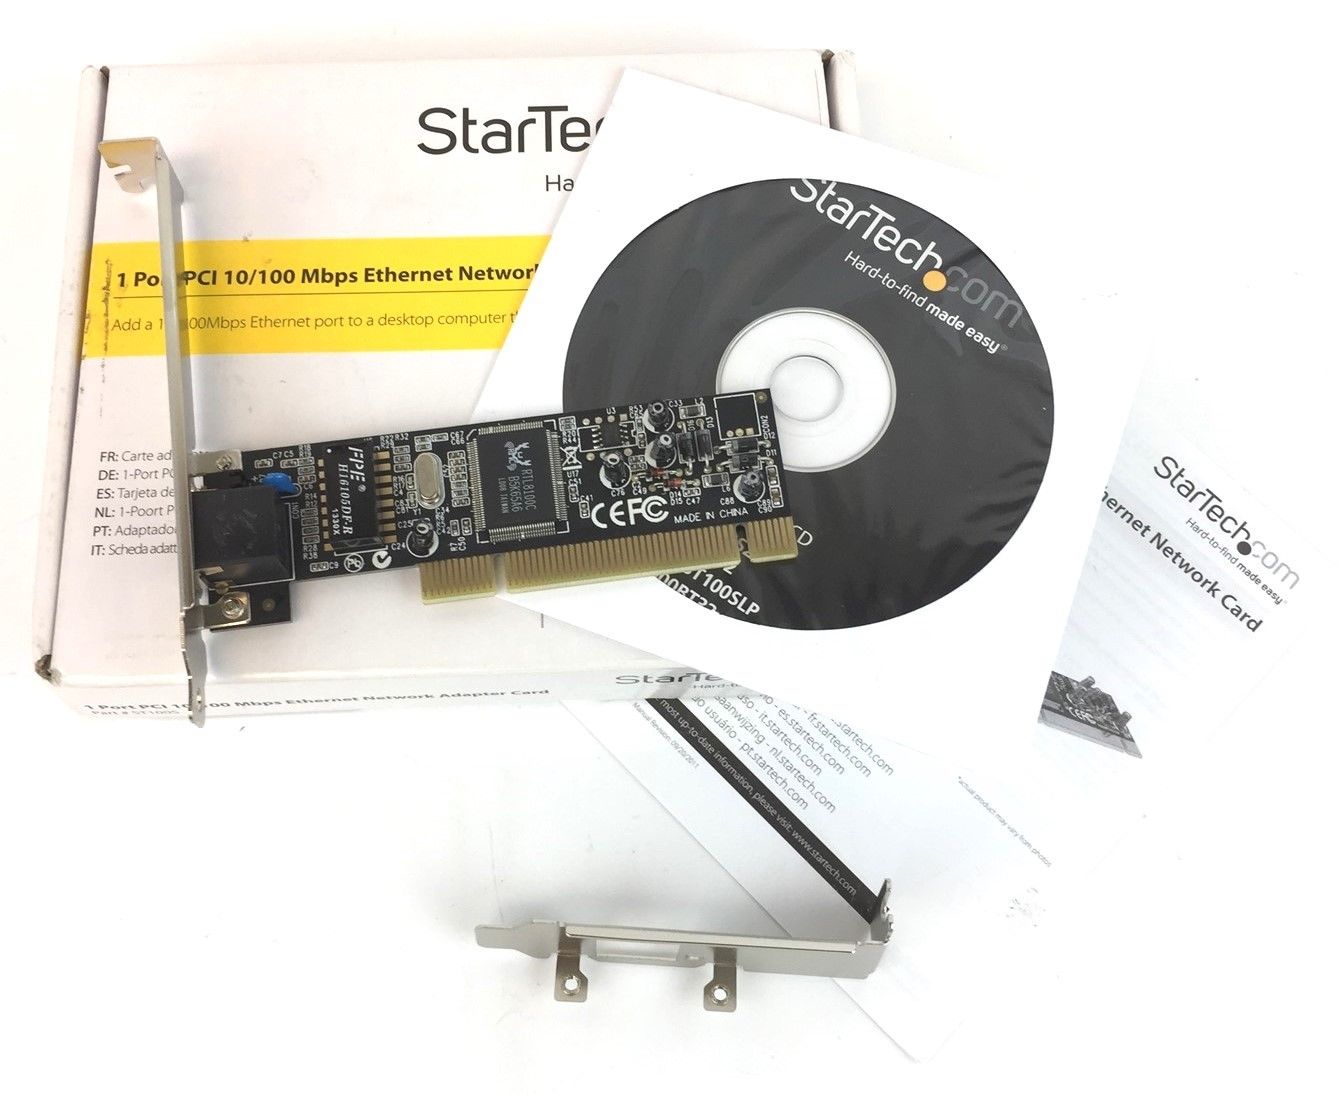 StarTech.com ST100S 1 Port PCI 10/100 Mbps Ethernet Network Adapter